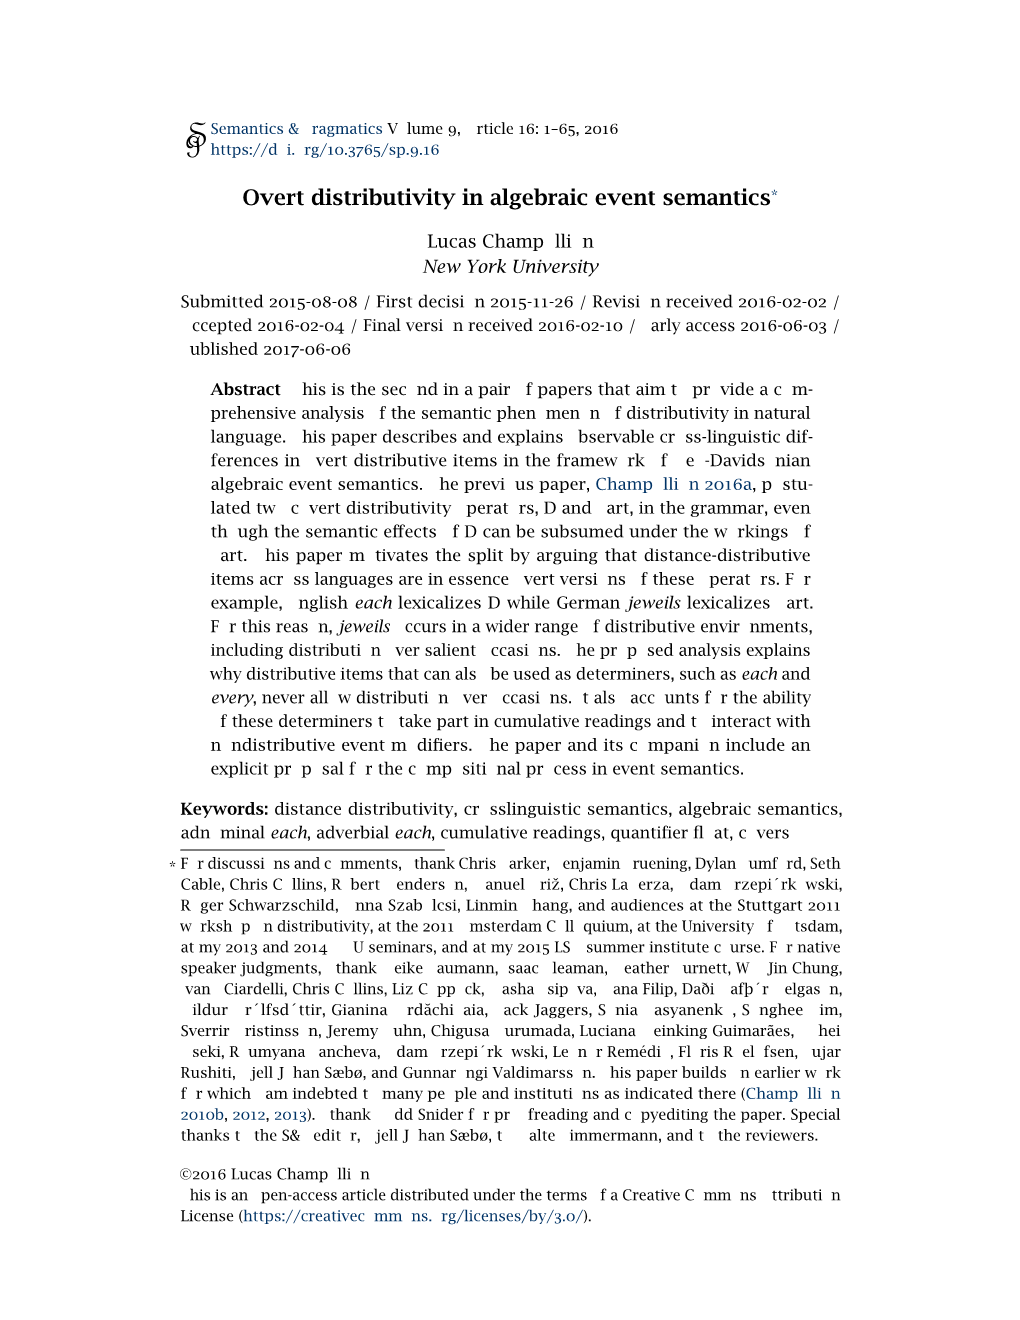 Overt Distributivity in Algebraic Event Semantics*